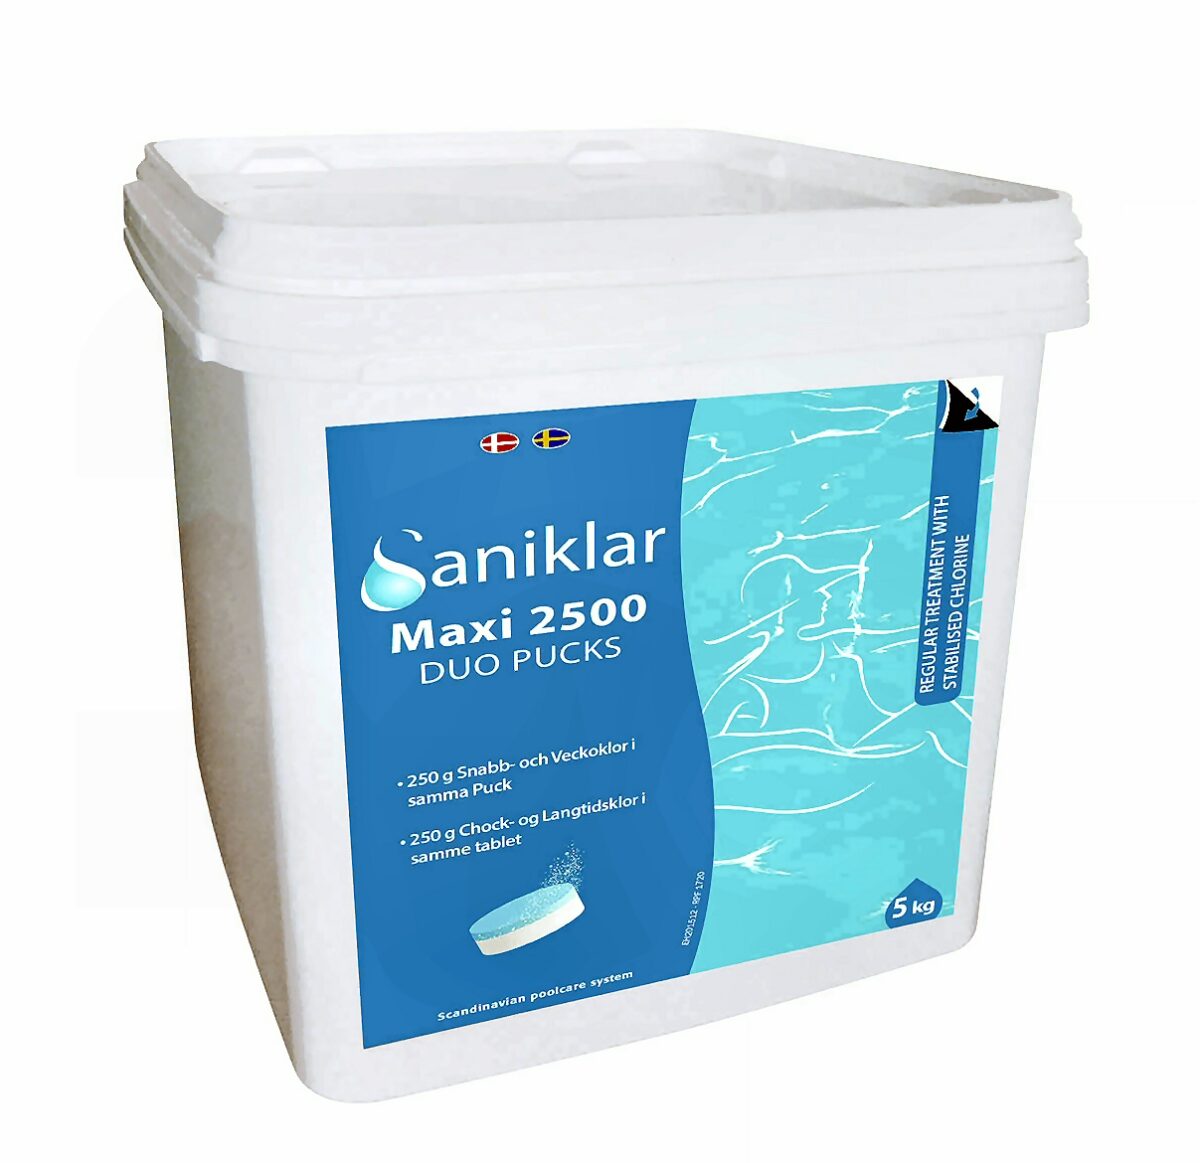 saniklar-maxi-2500-duo-pucks-5-kg fra SolBadet.dk